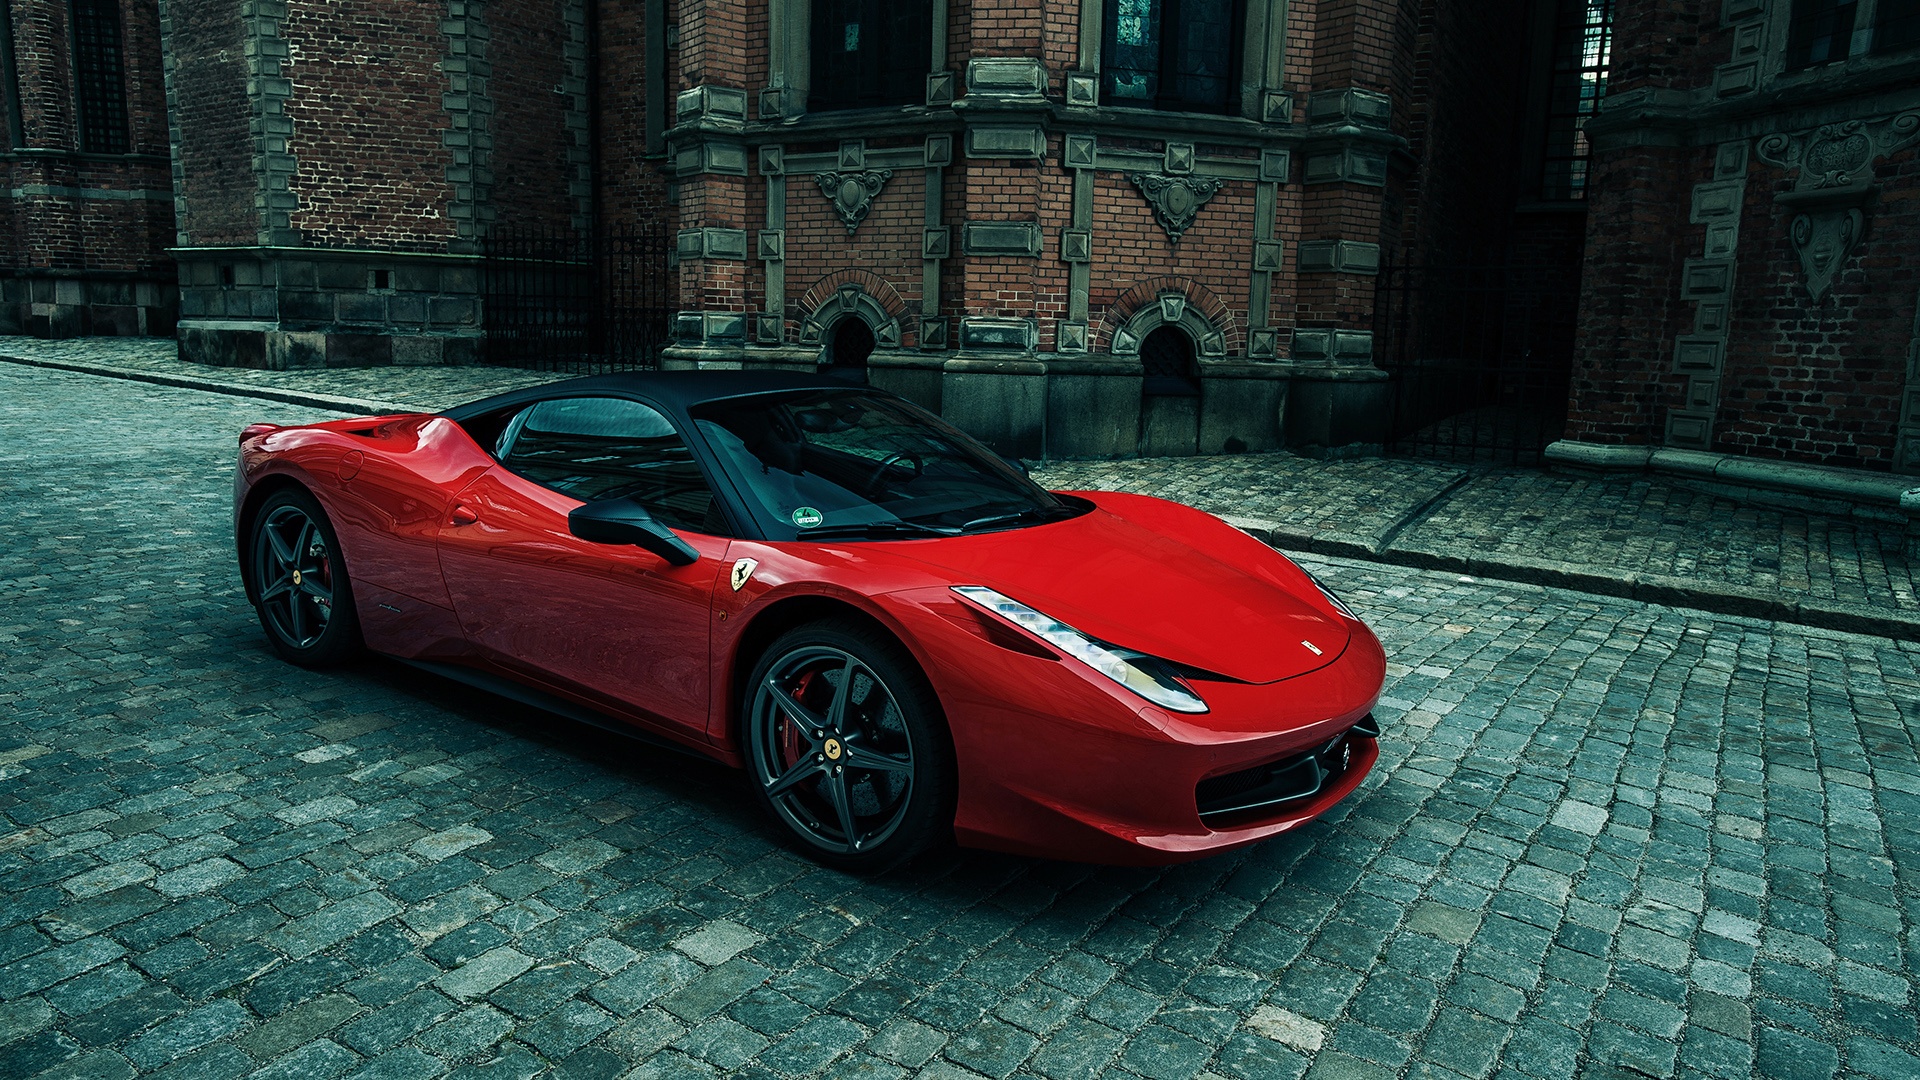 Ferrari Italia HD Wallpaper 1080p Image